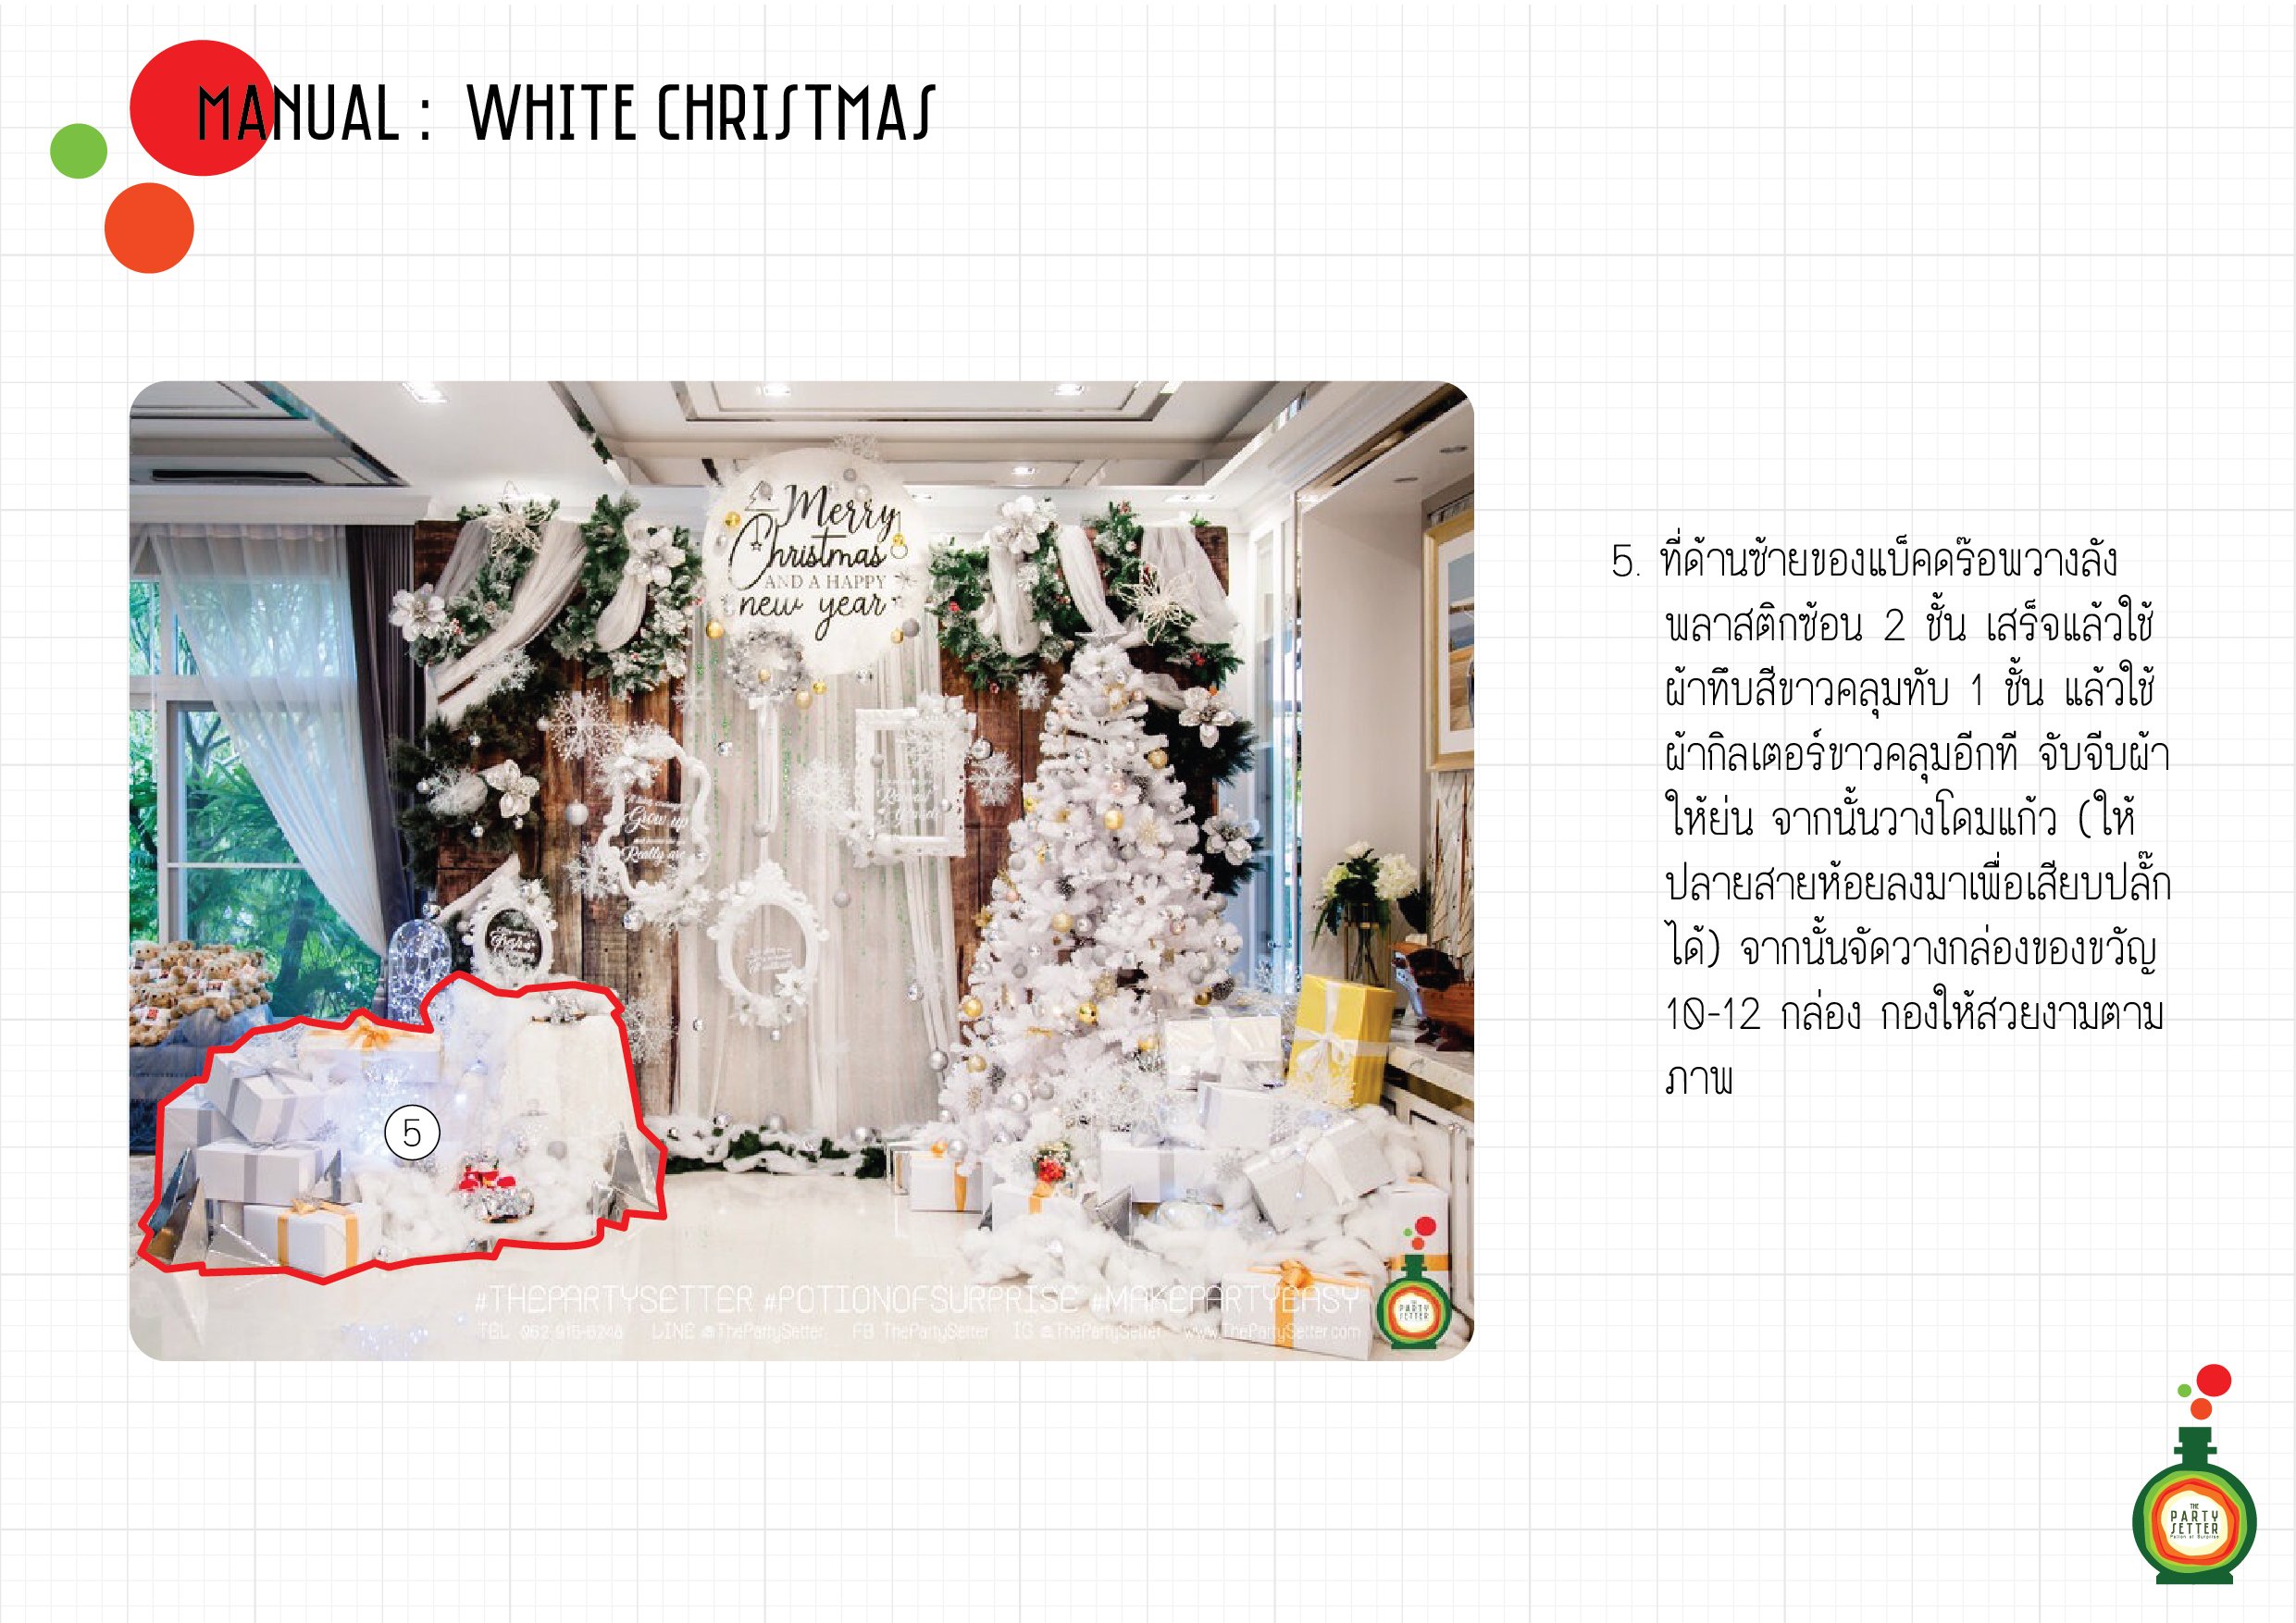 Manual_White Christmas-05-01.jpg